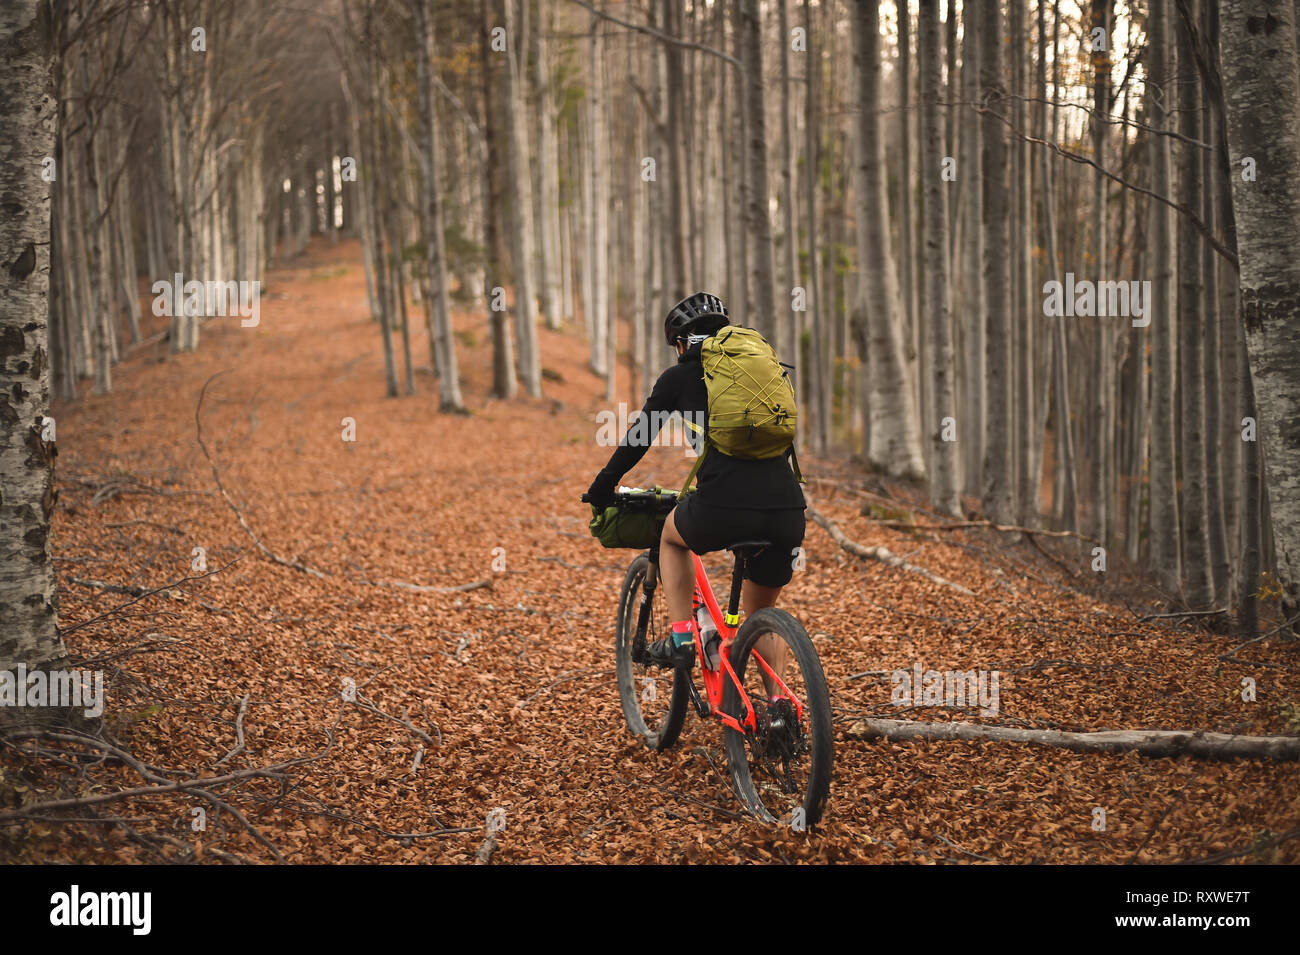 PRAHOVA/ROMANIA - OCTOBER 28, 2018: Autumn mountain scene riding with a mountain bike equipped with travel bags. Stock Photo